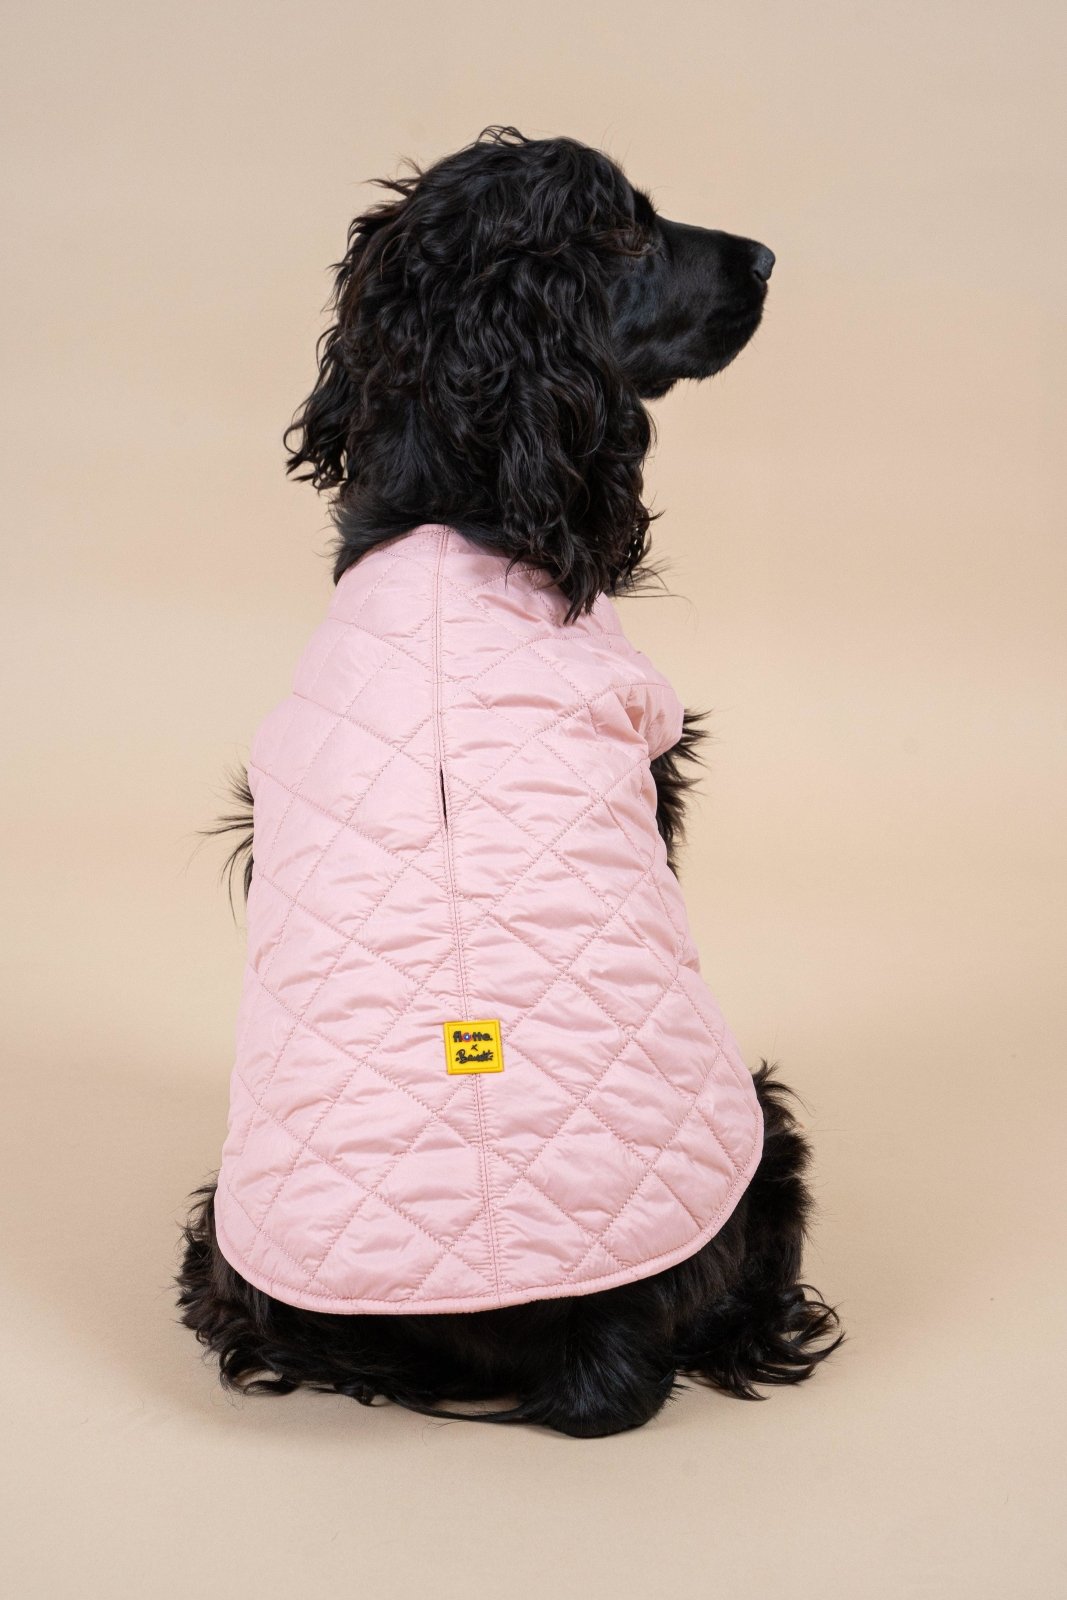 Vincennes - Sleeveless down jacket for dogs - Flotte